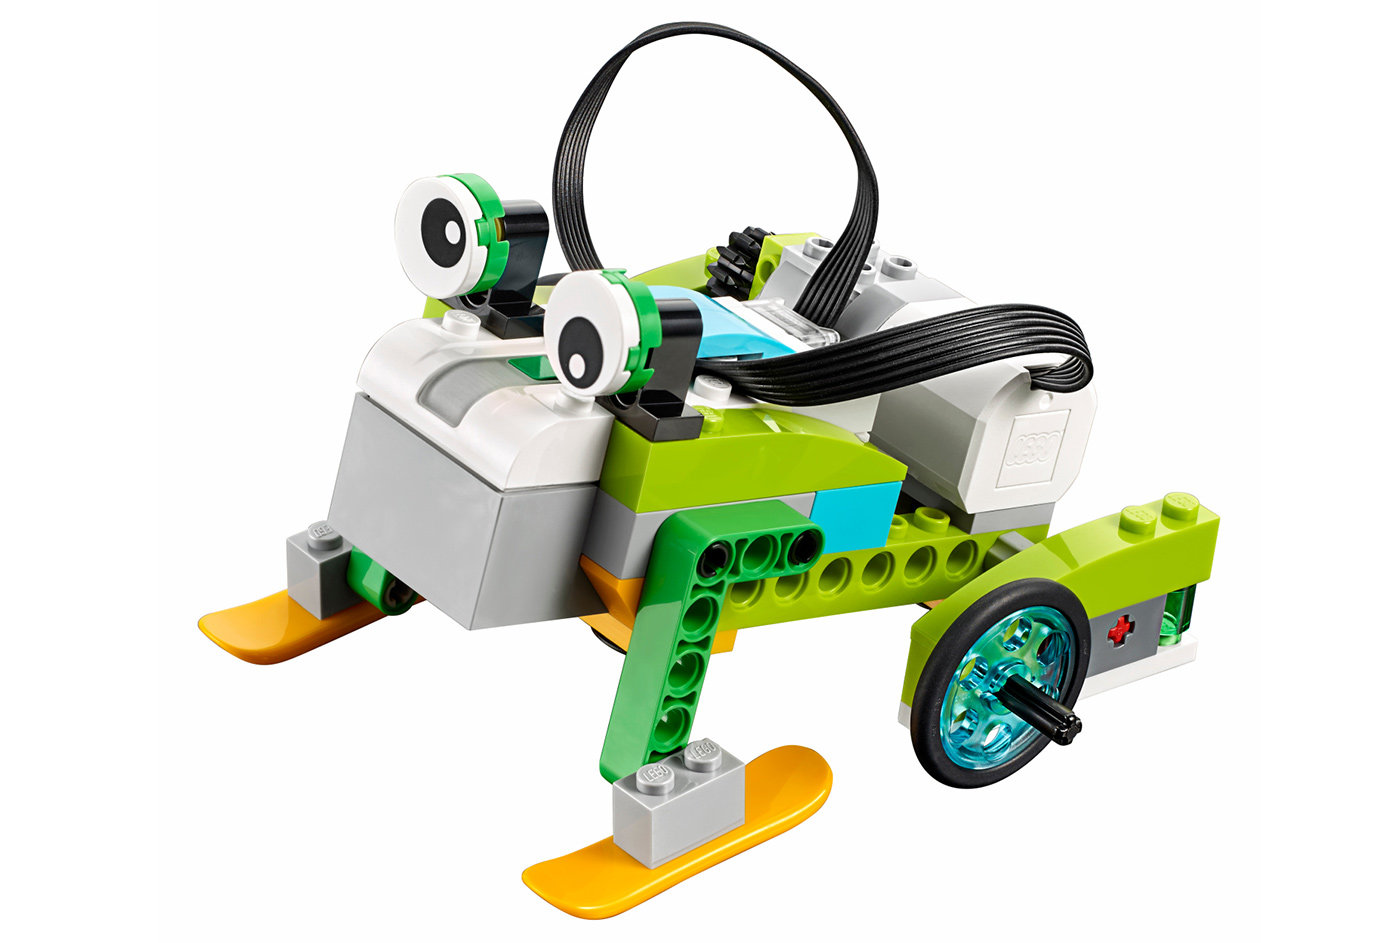 picture of Lego WeDo 2.0 frog robot